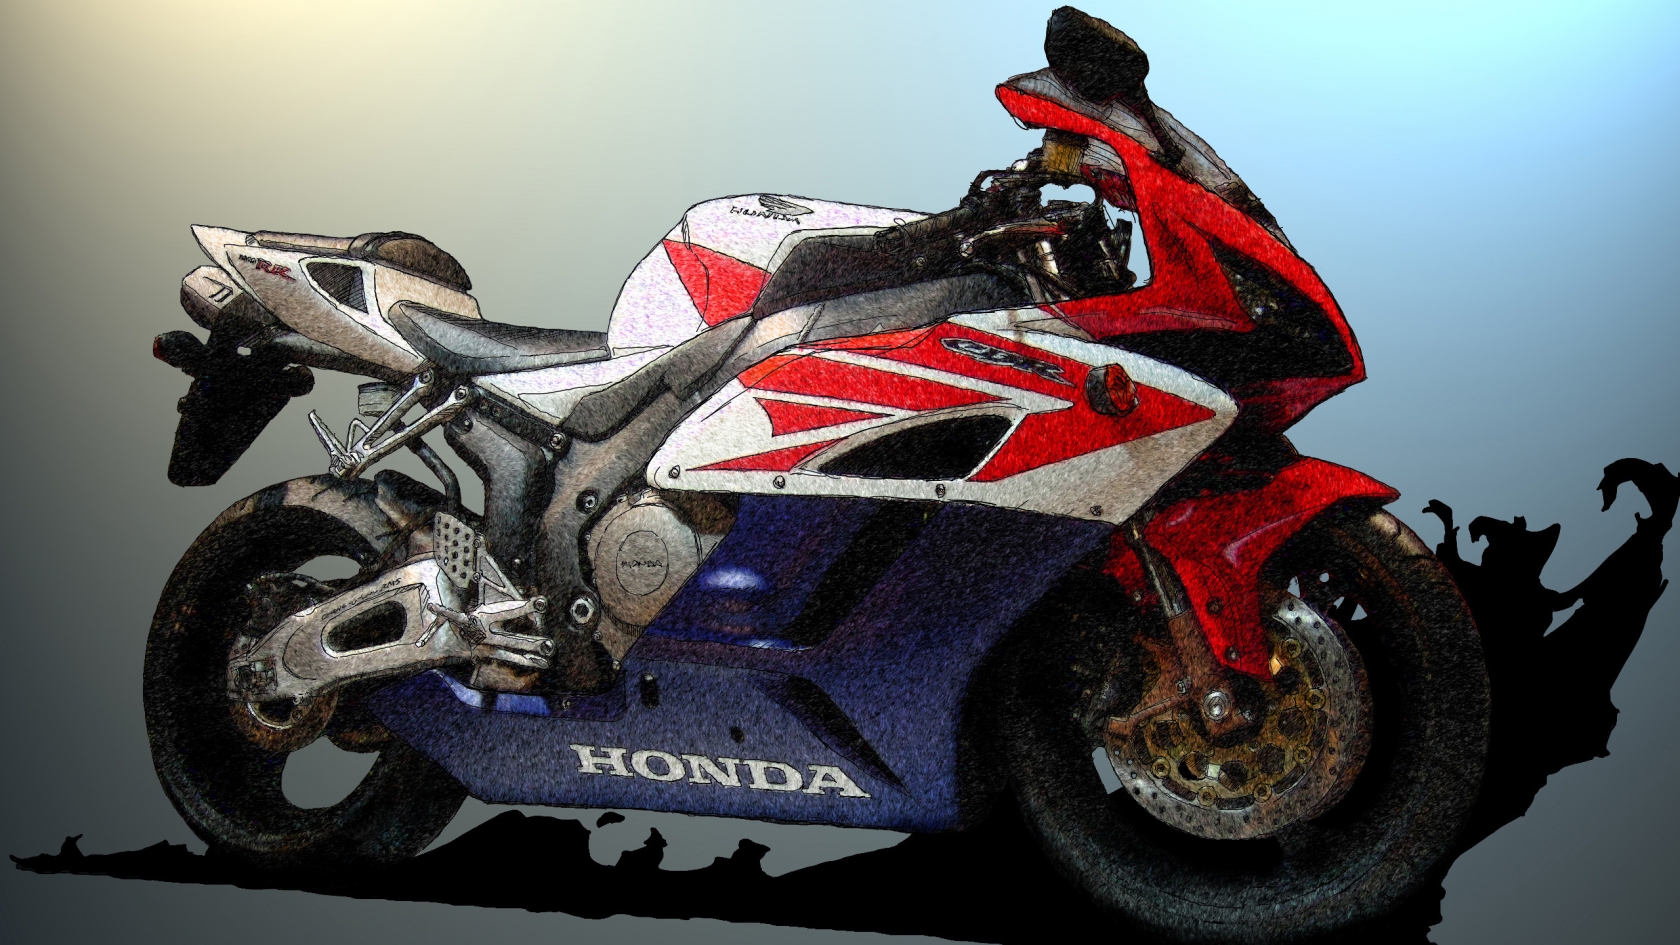 Honda CBR Sketch for 1680 x 945 HDTV resolution